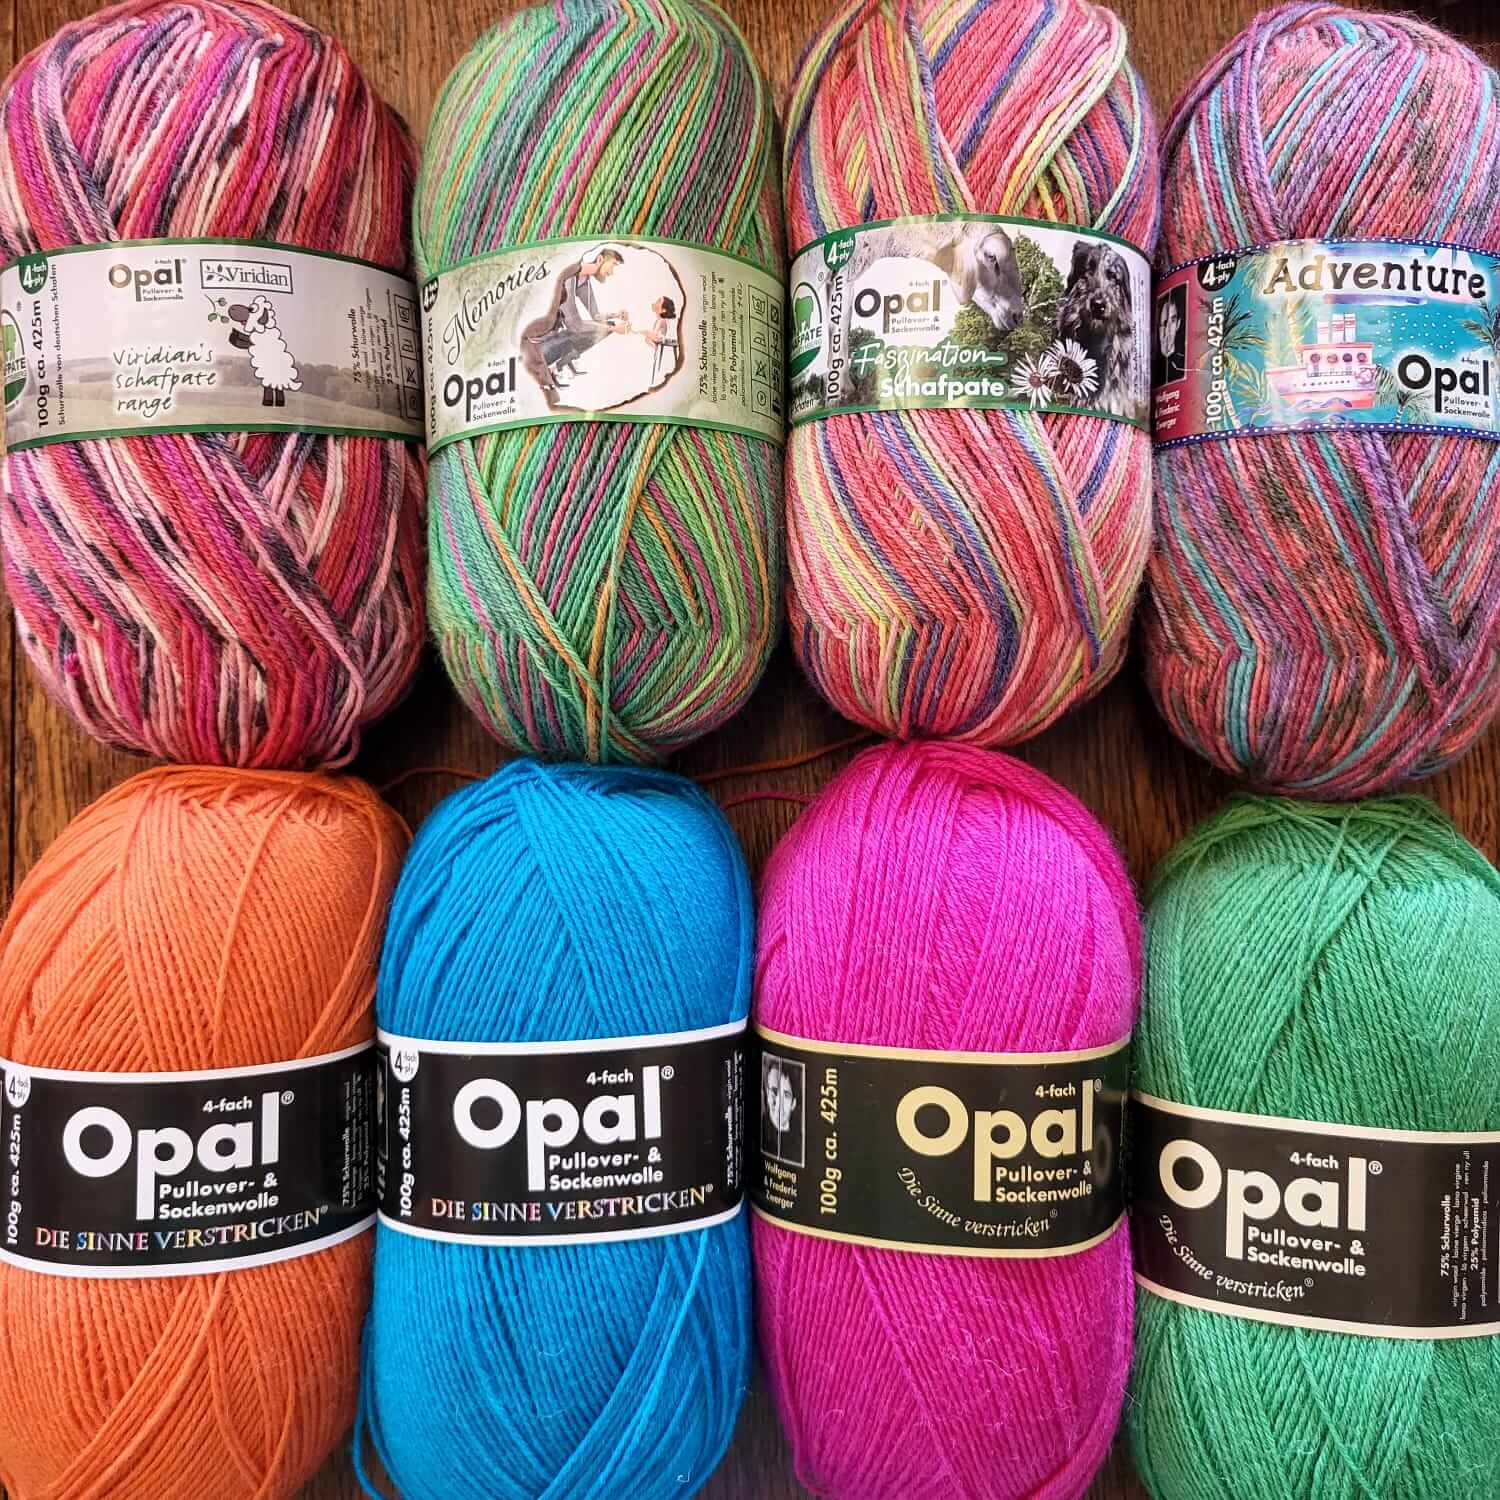 Opal Yarn Brand